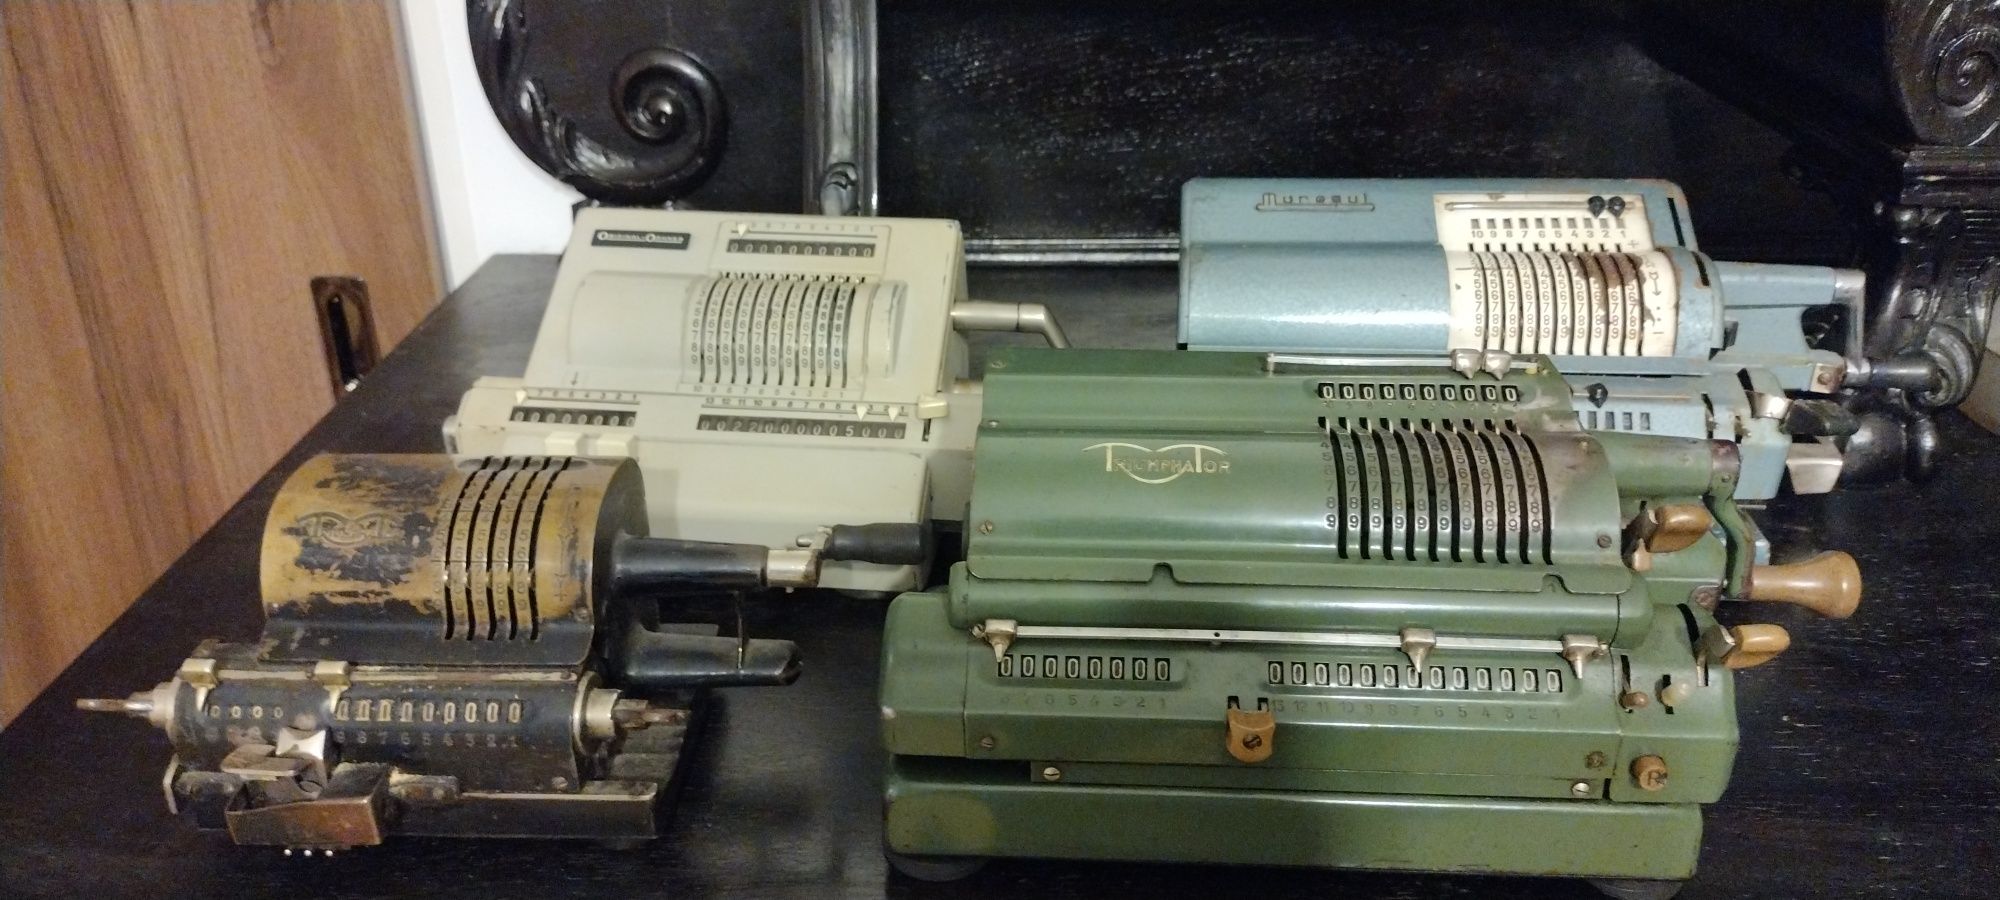 Mașini de calcul vechi (aritmografe)